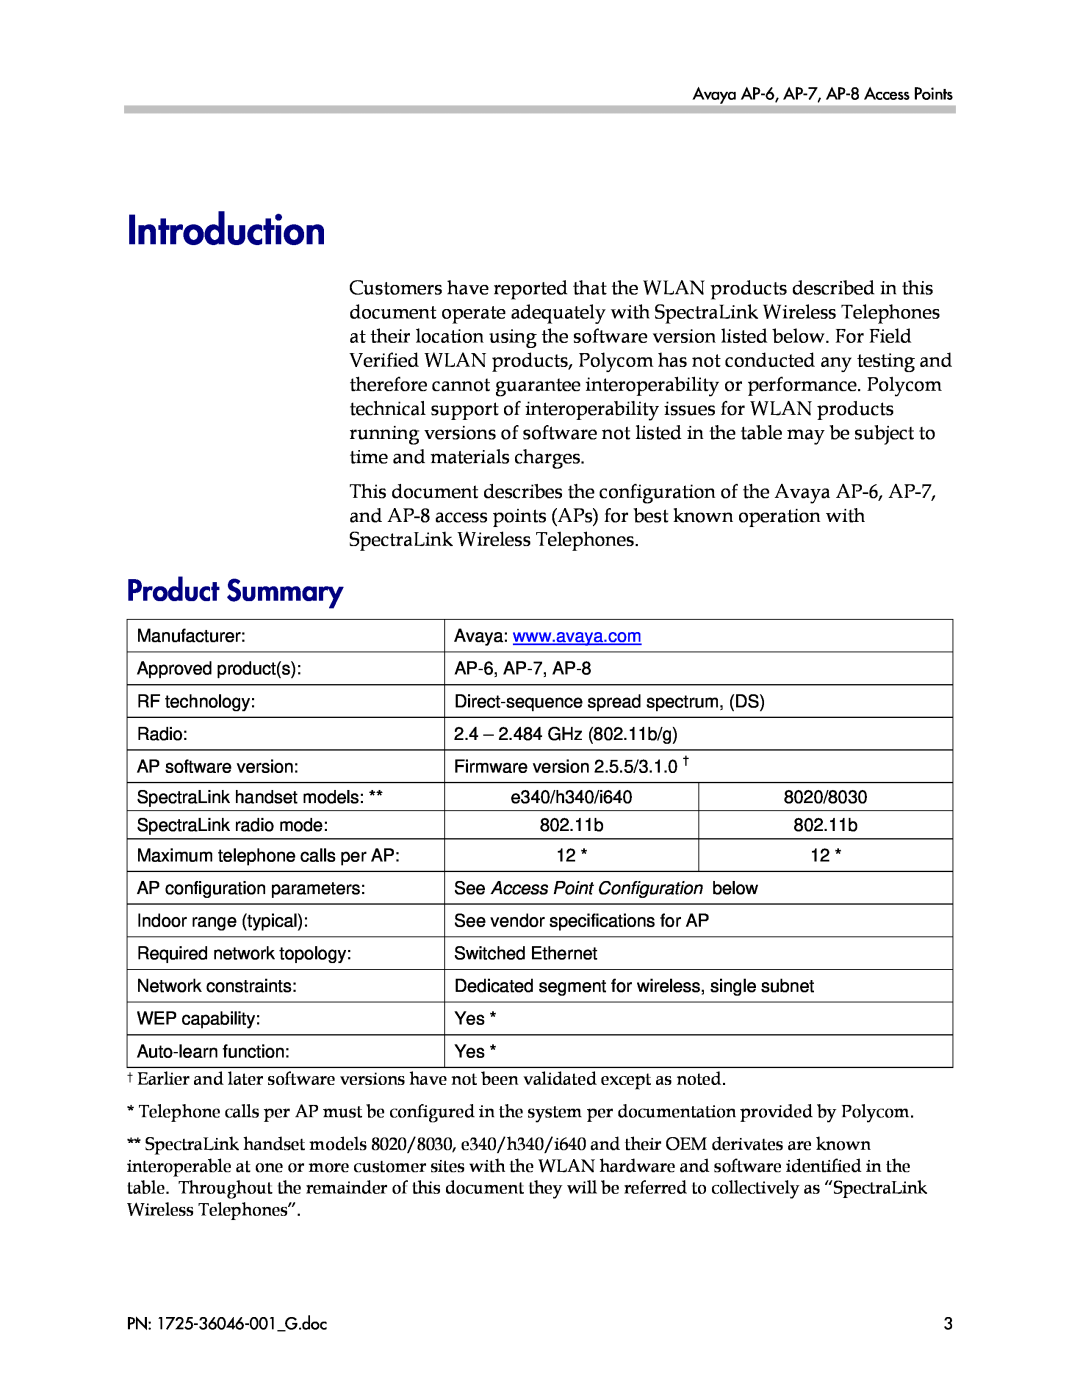 Polycom AP-7, AP-8, AP-6 manual Introduction, Product Summary 